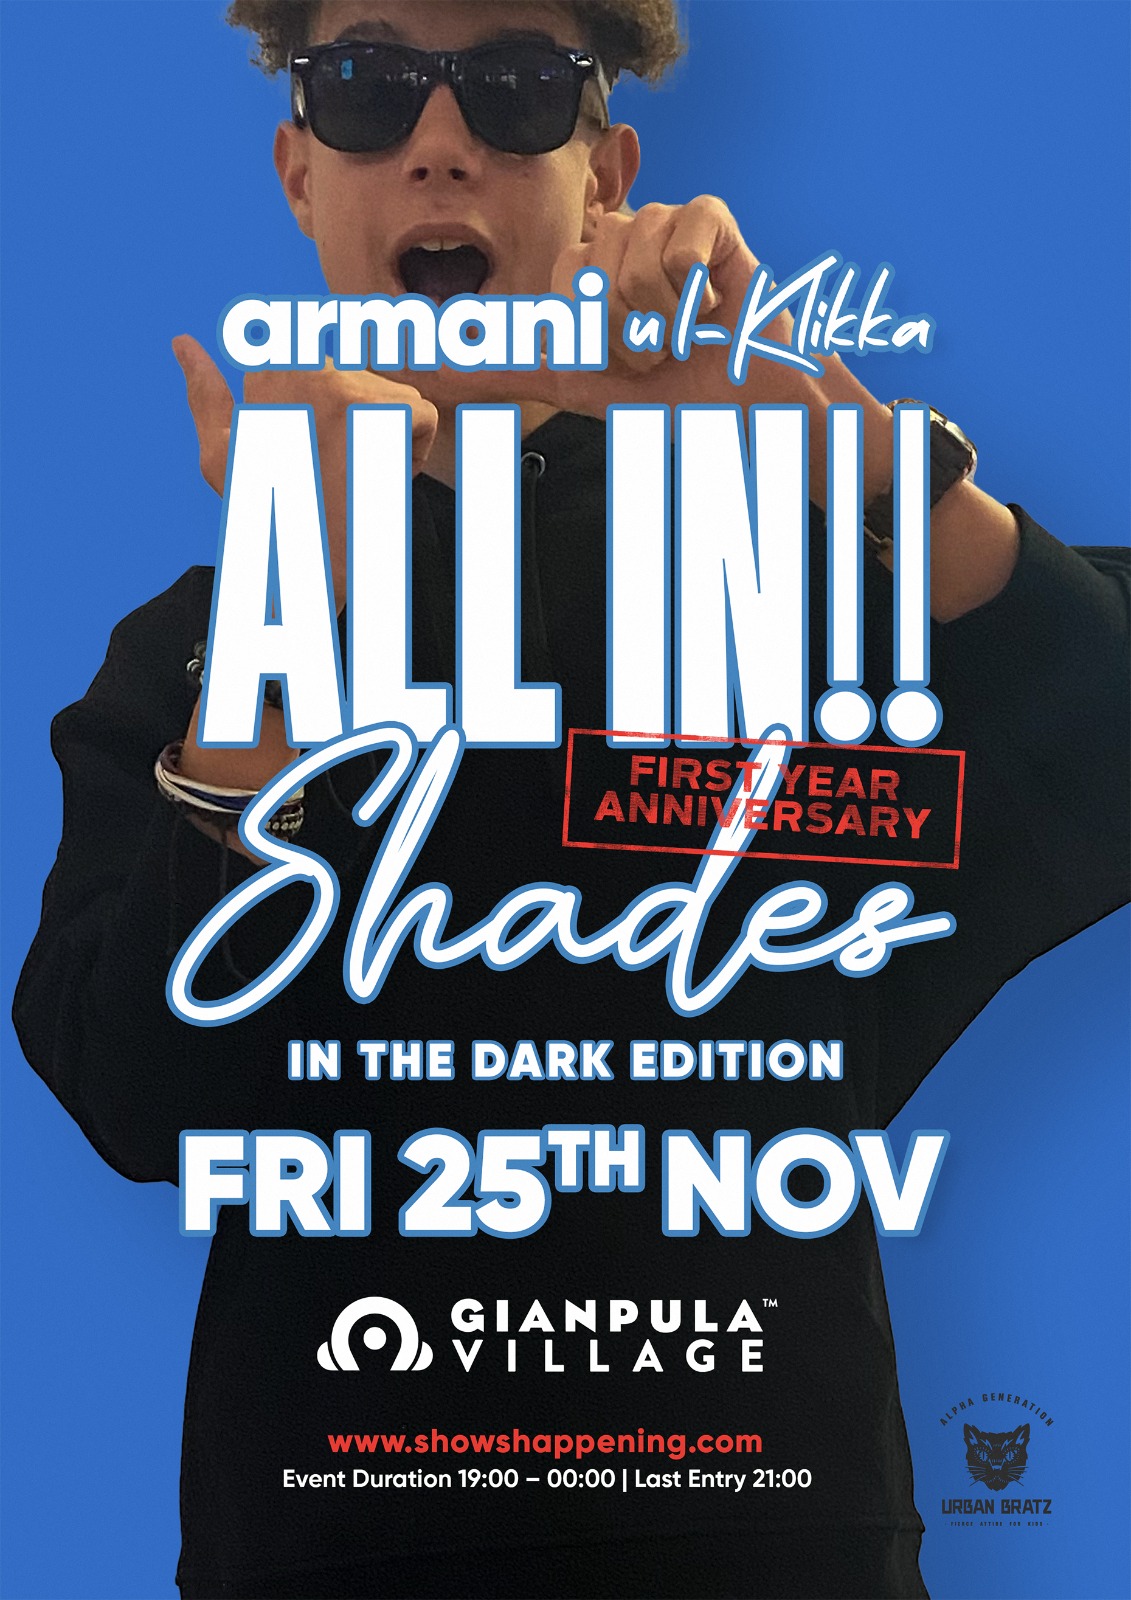 Armani u l- Klikka presents All In 1st Year Anniversary (Shades In The Dark Edition) poster